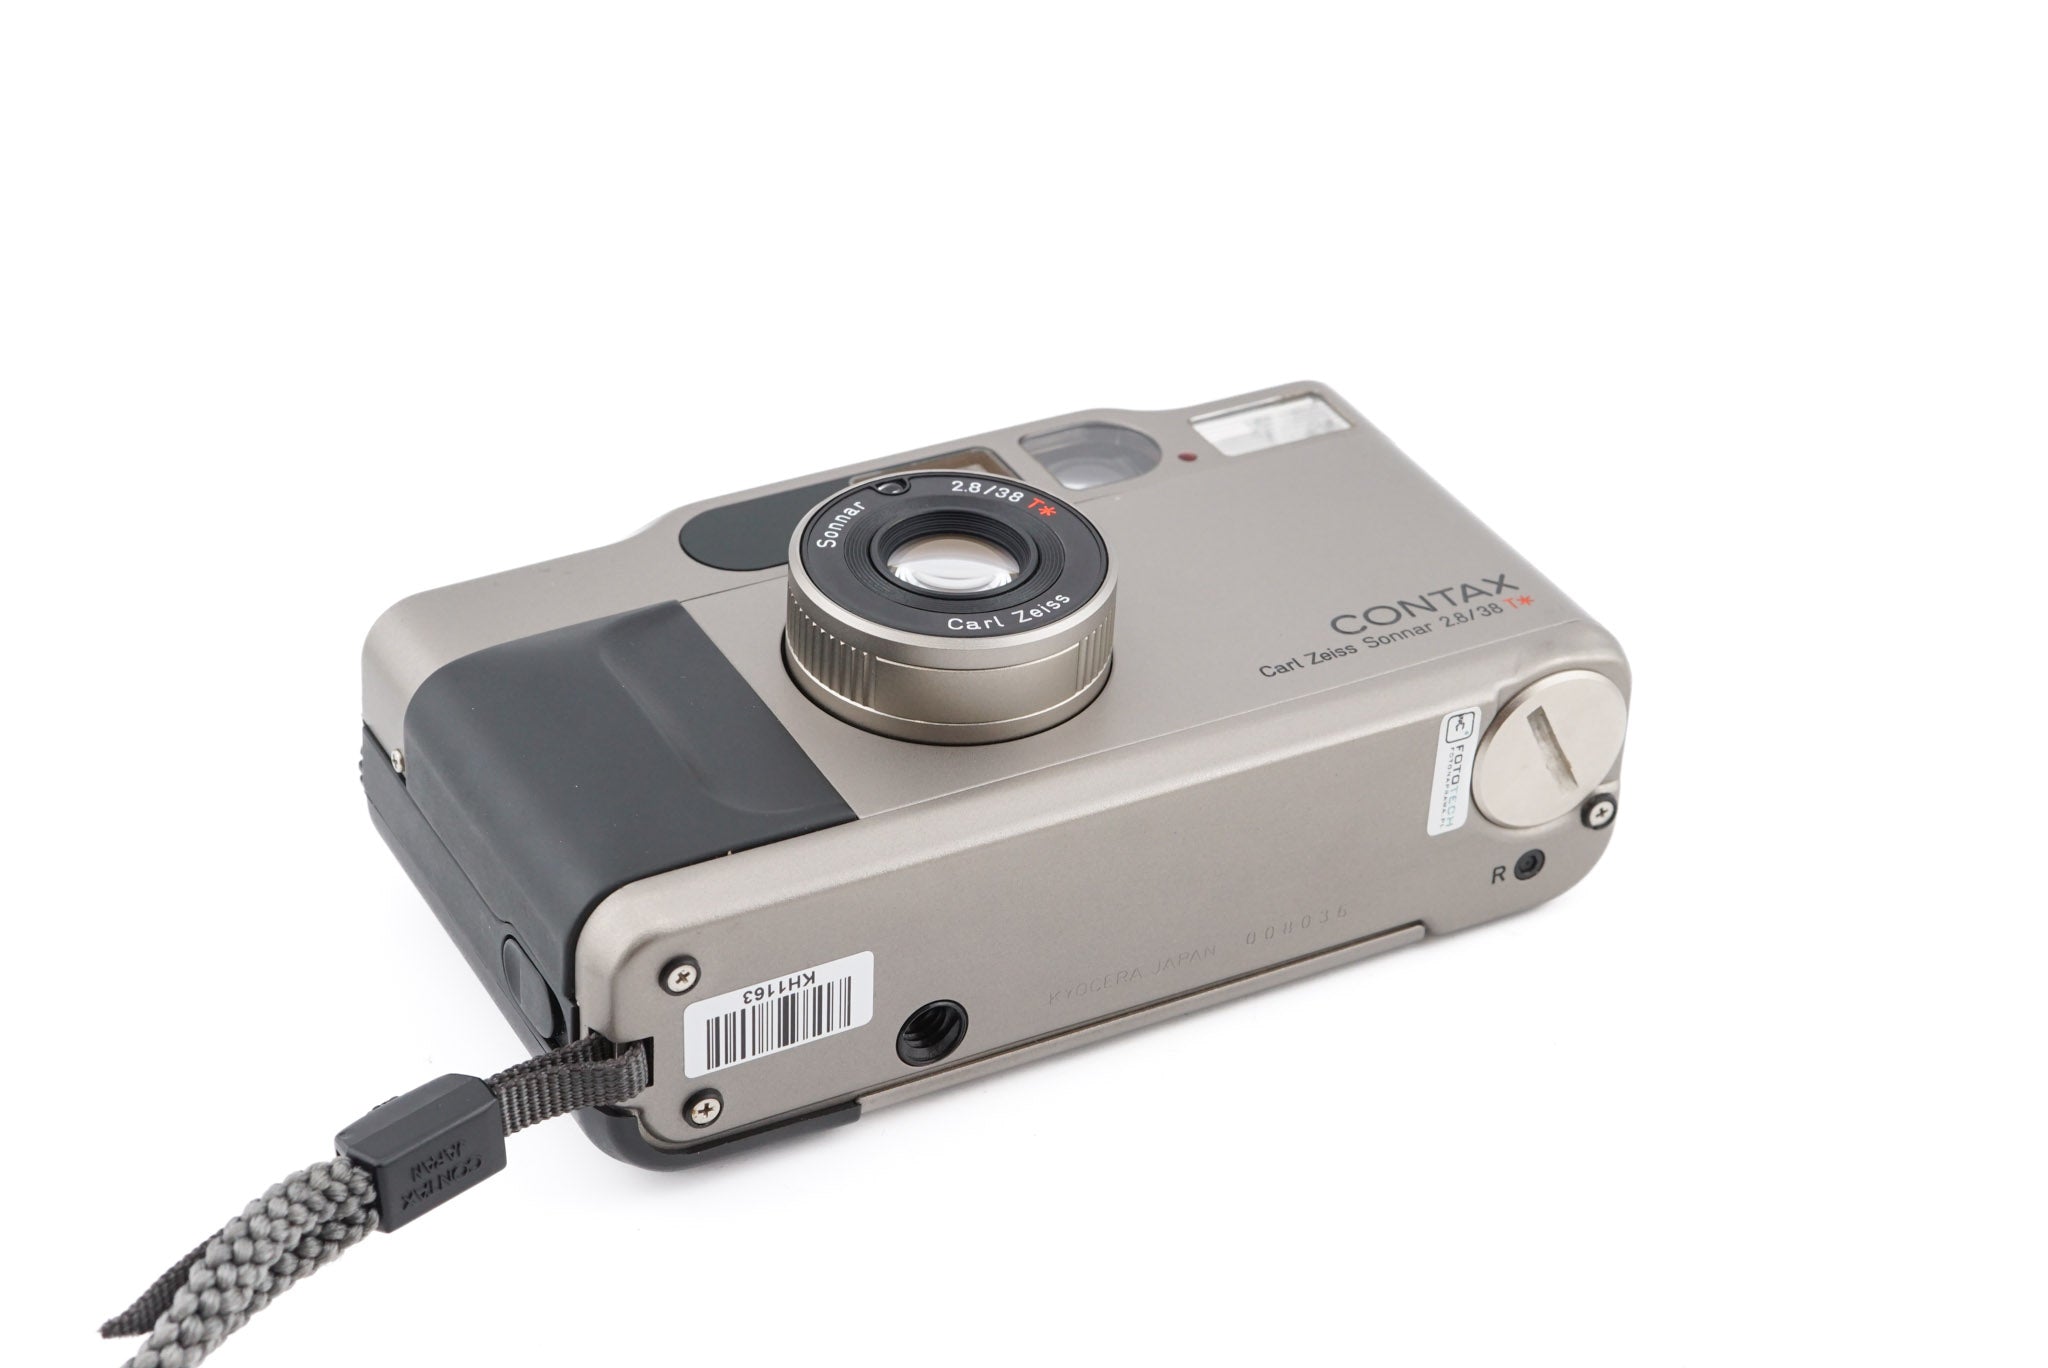 Contax T2 – Kamerastore